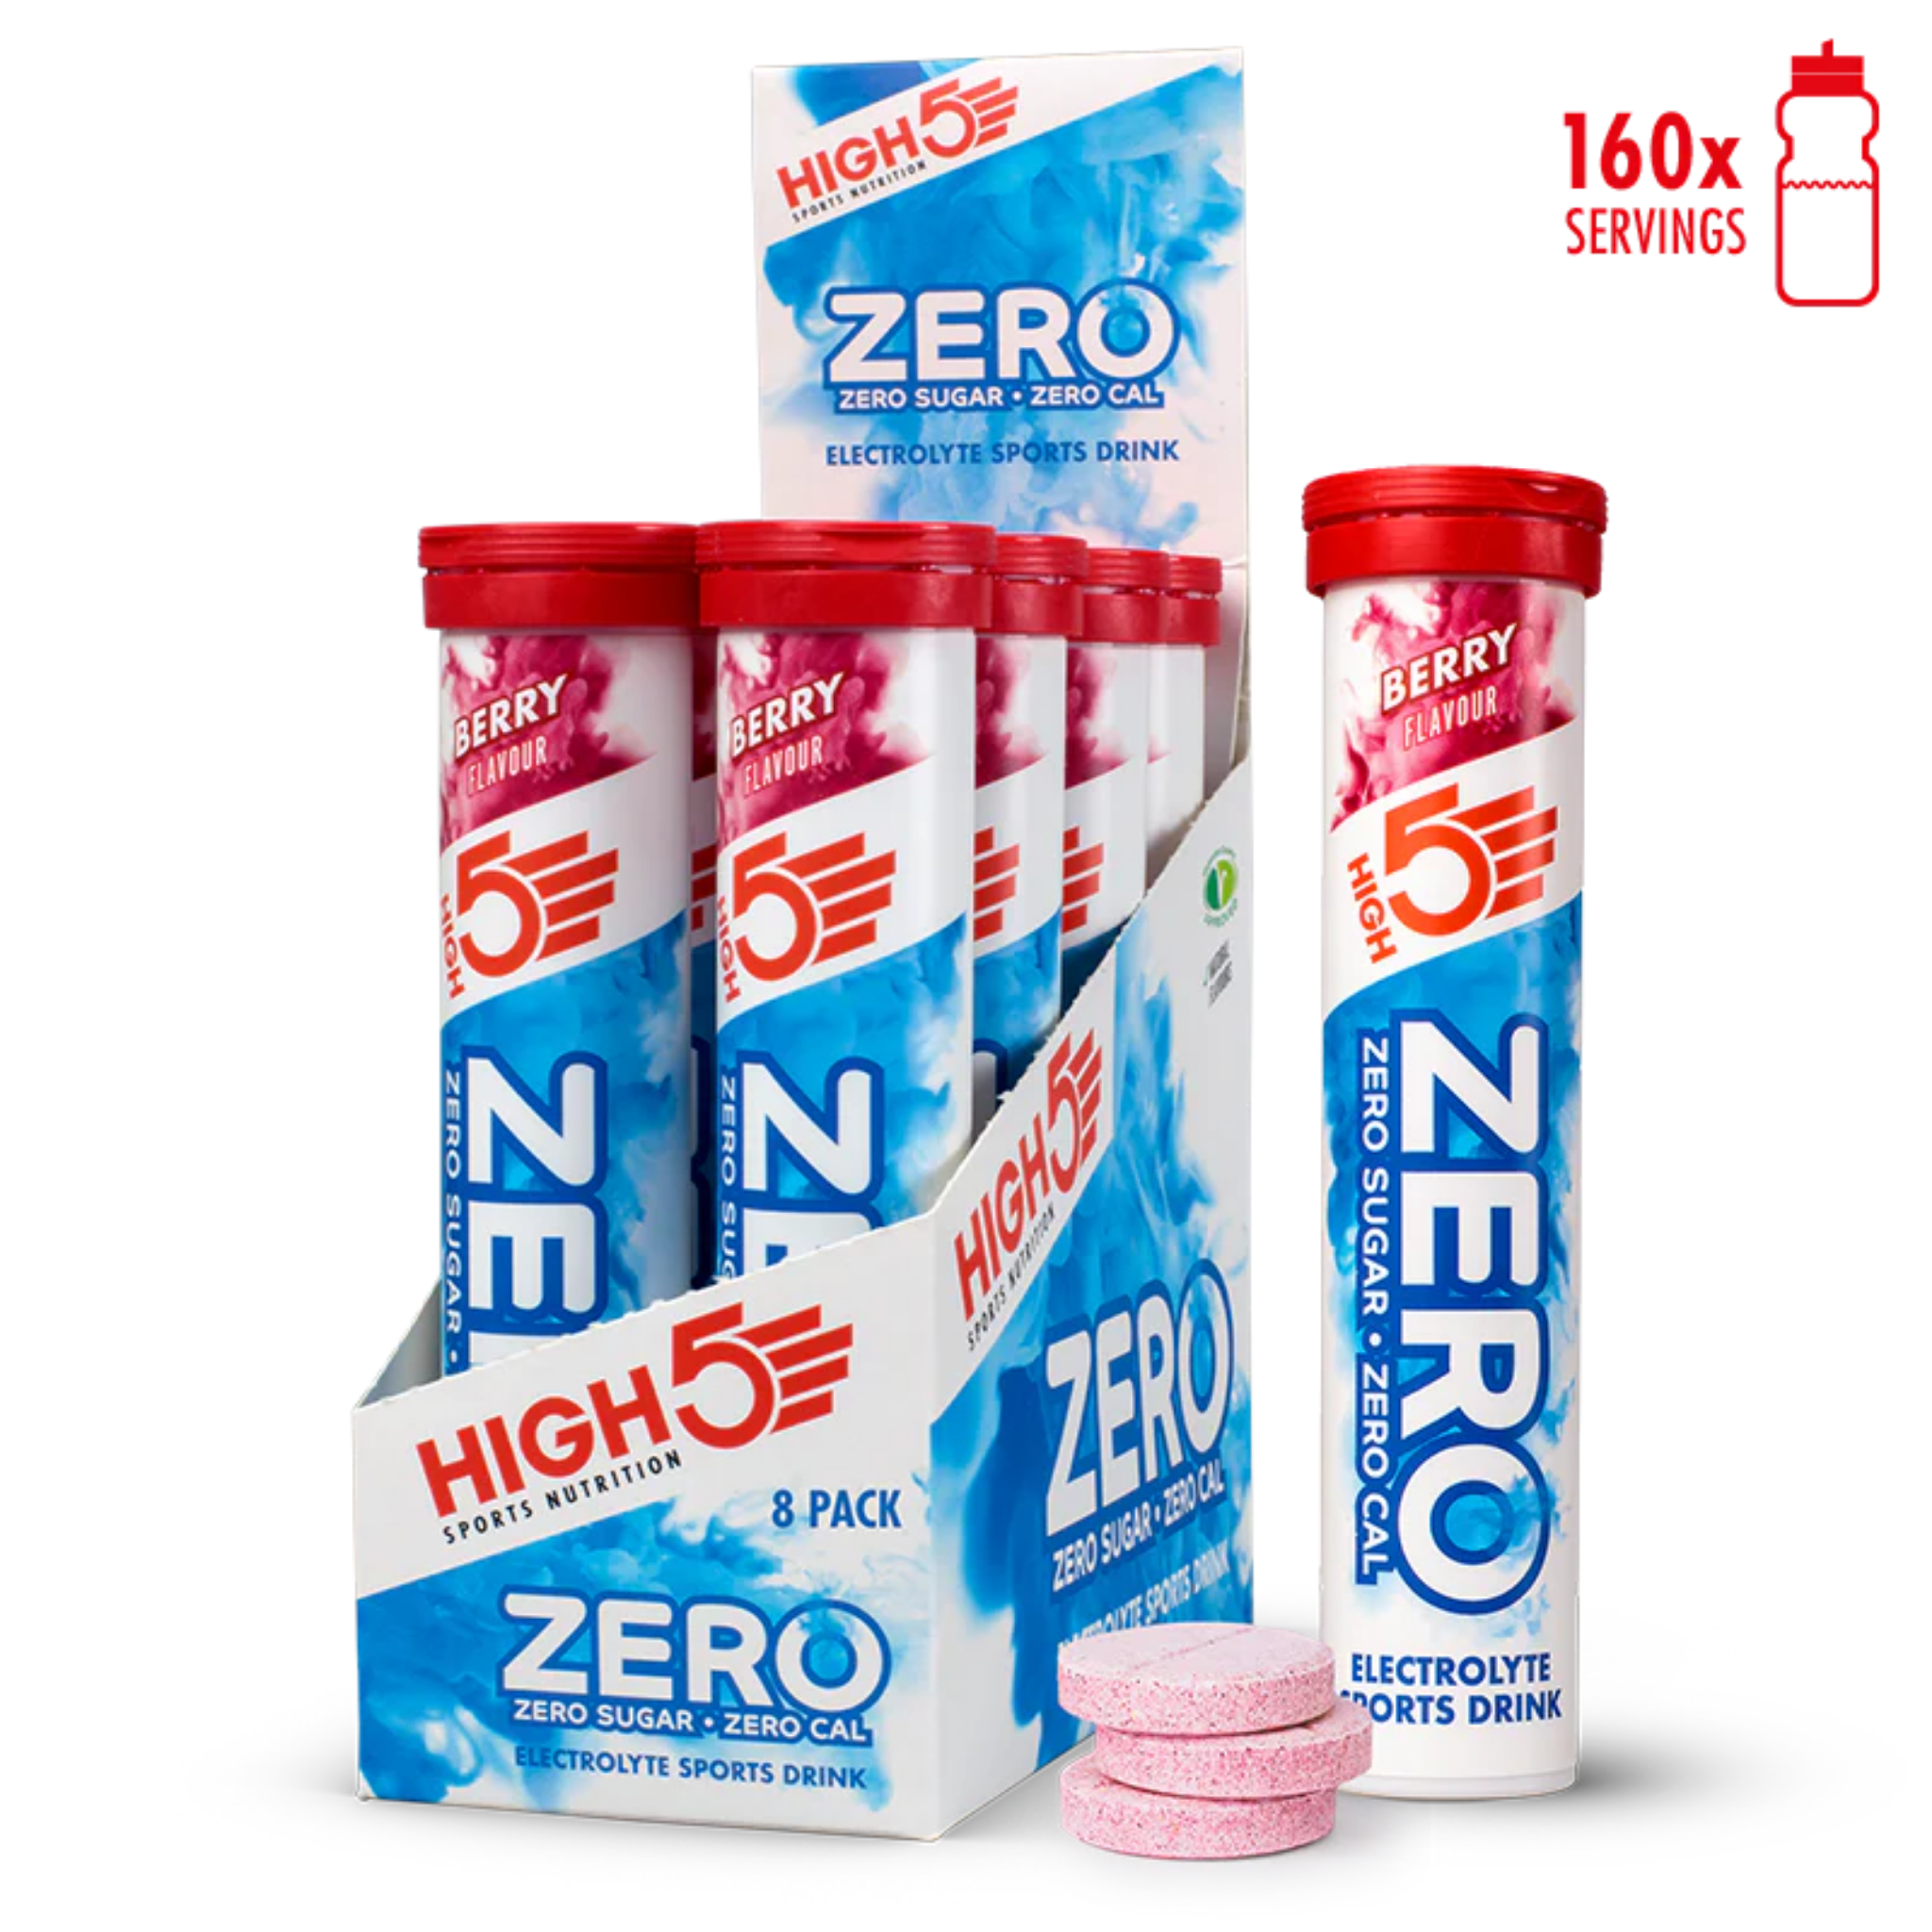 High5 Elektrolyttabs ZERO Berry (8x20 tabs)